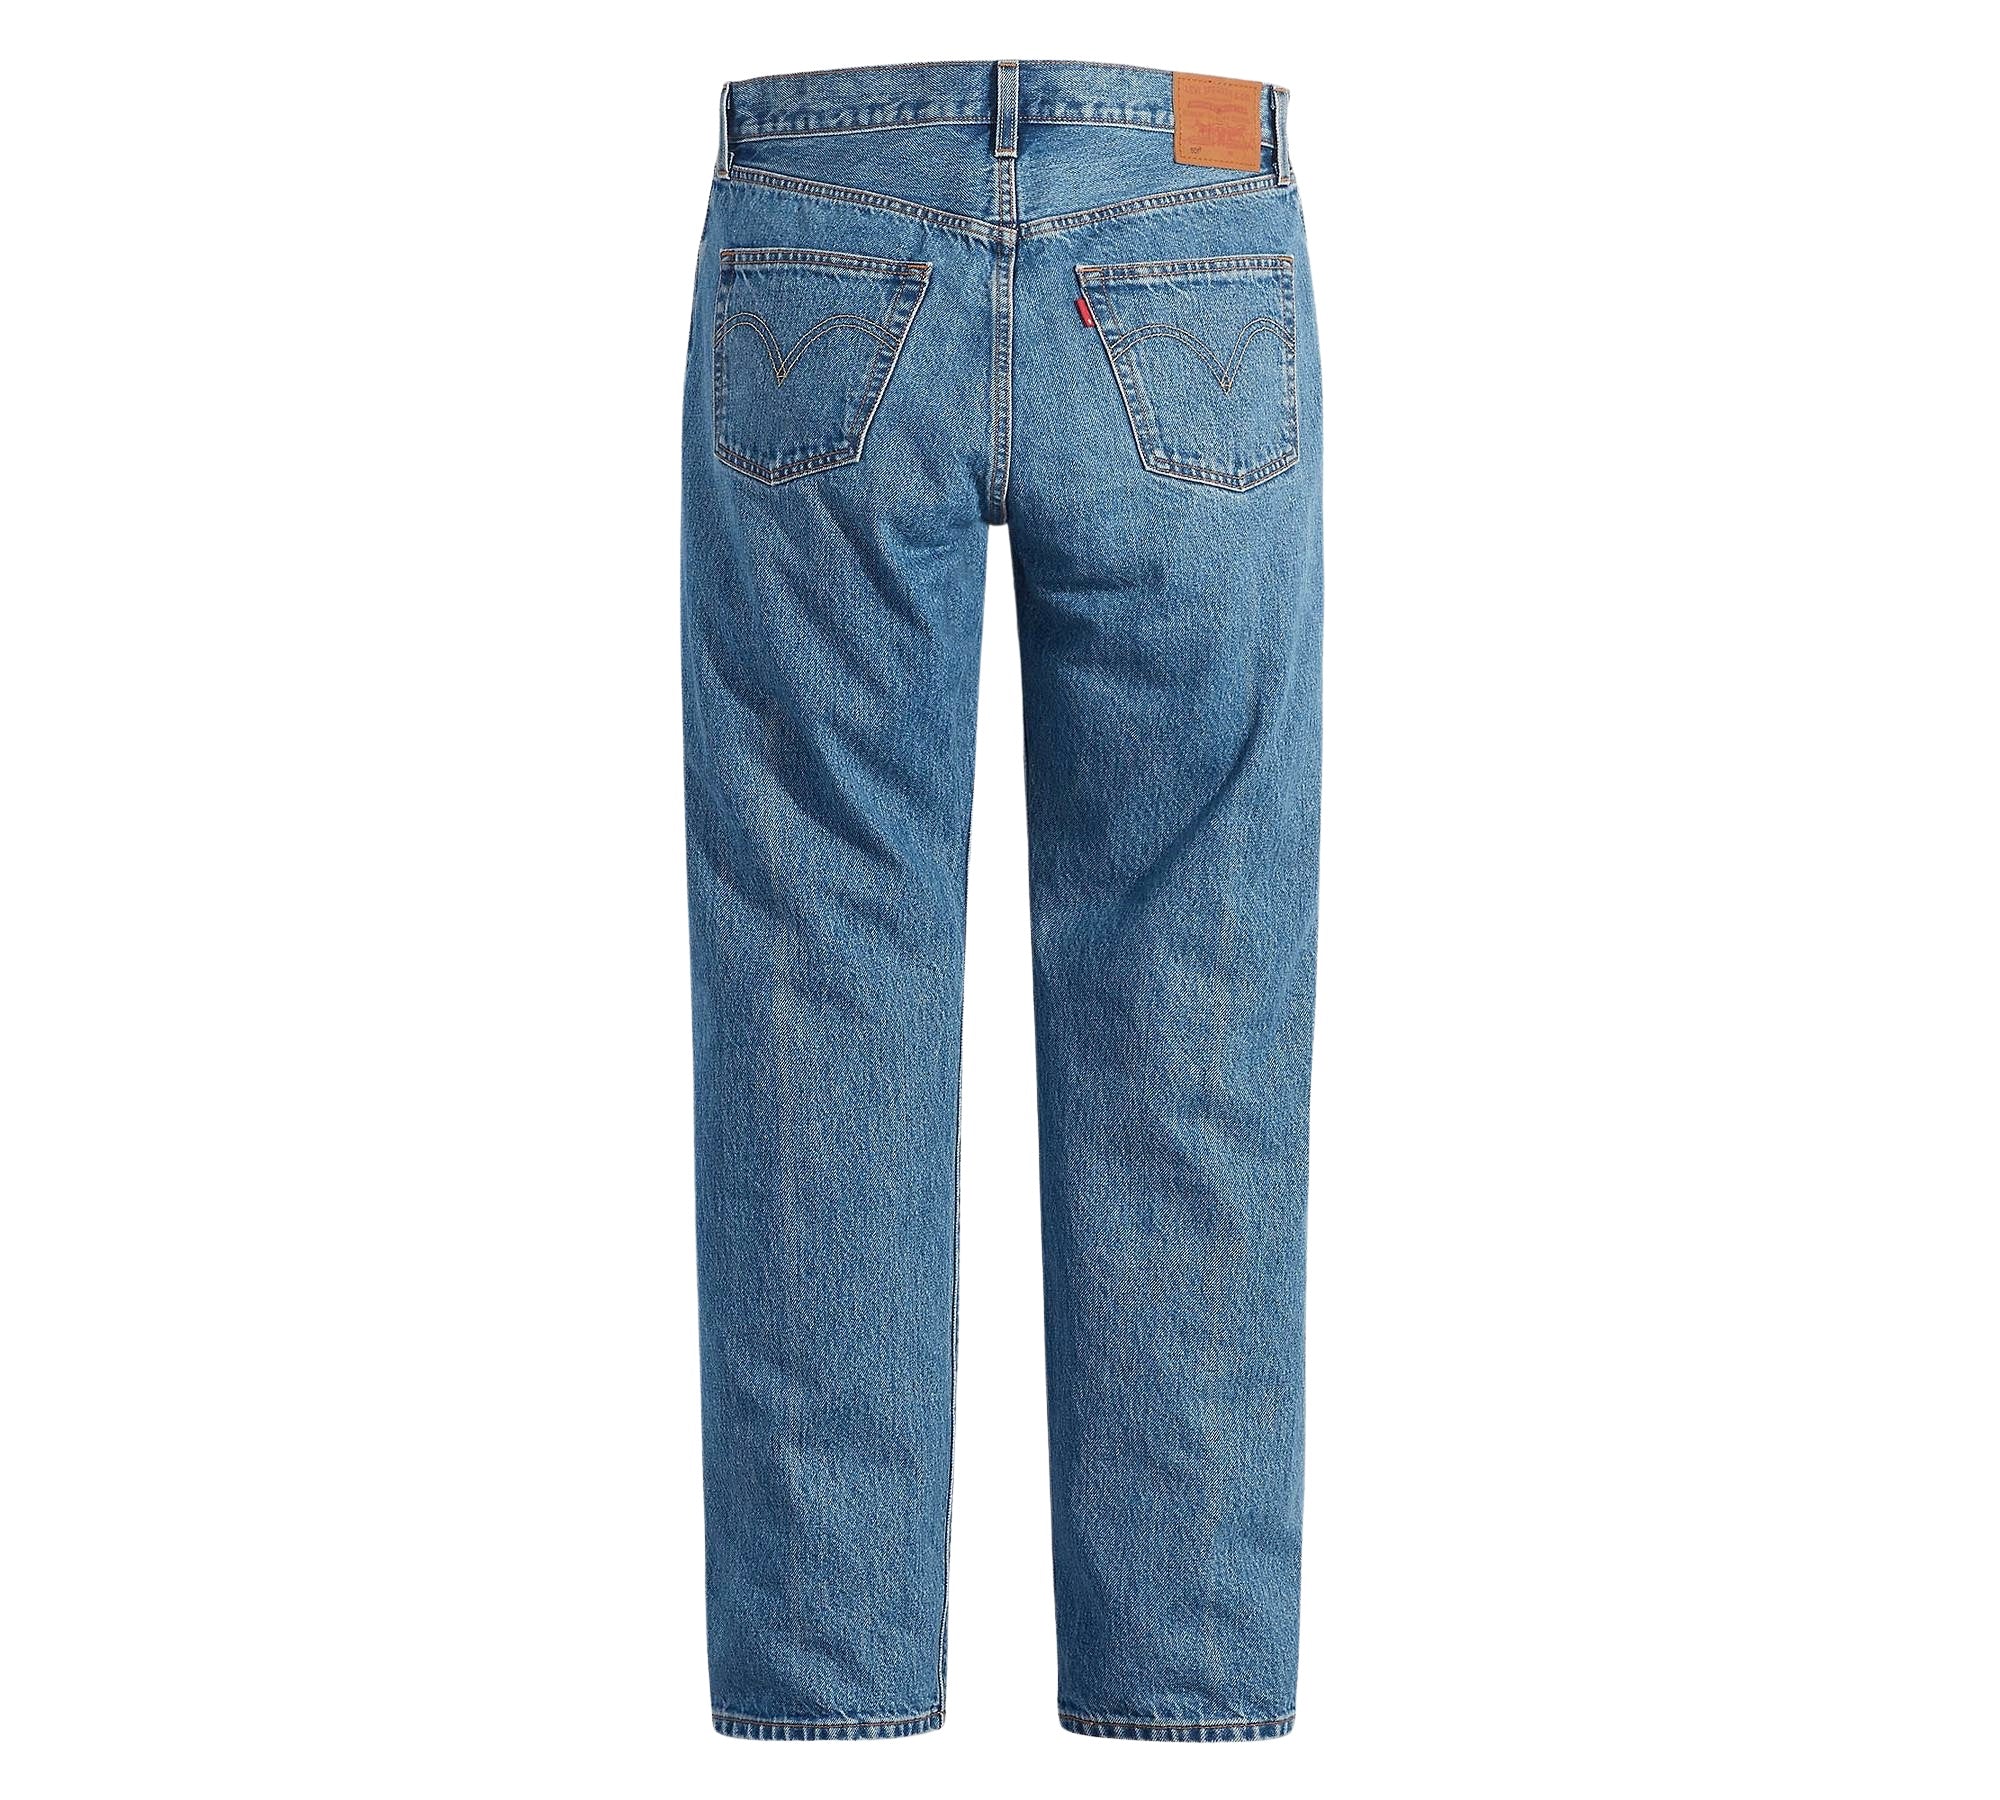 4 Pack - Vintage LEVI'S Classic Blue Zip Fly Jeans - Waist 36 - Length 30 - Vintage Superstore Online